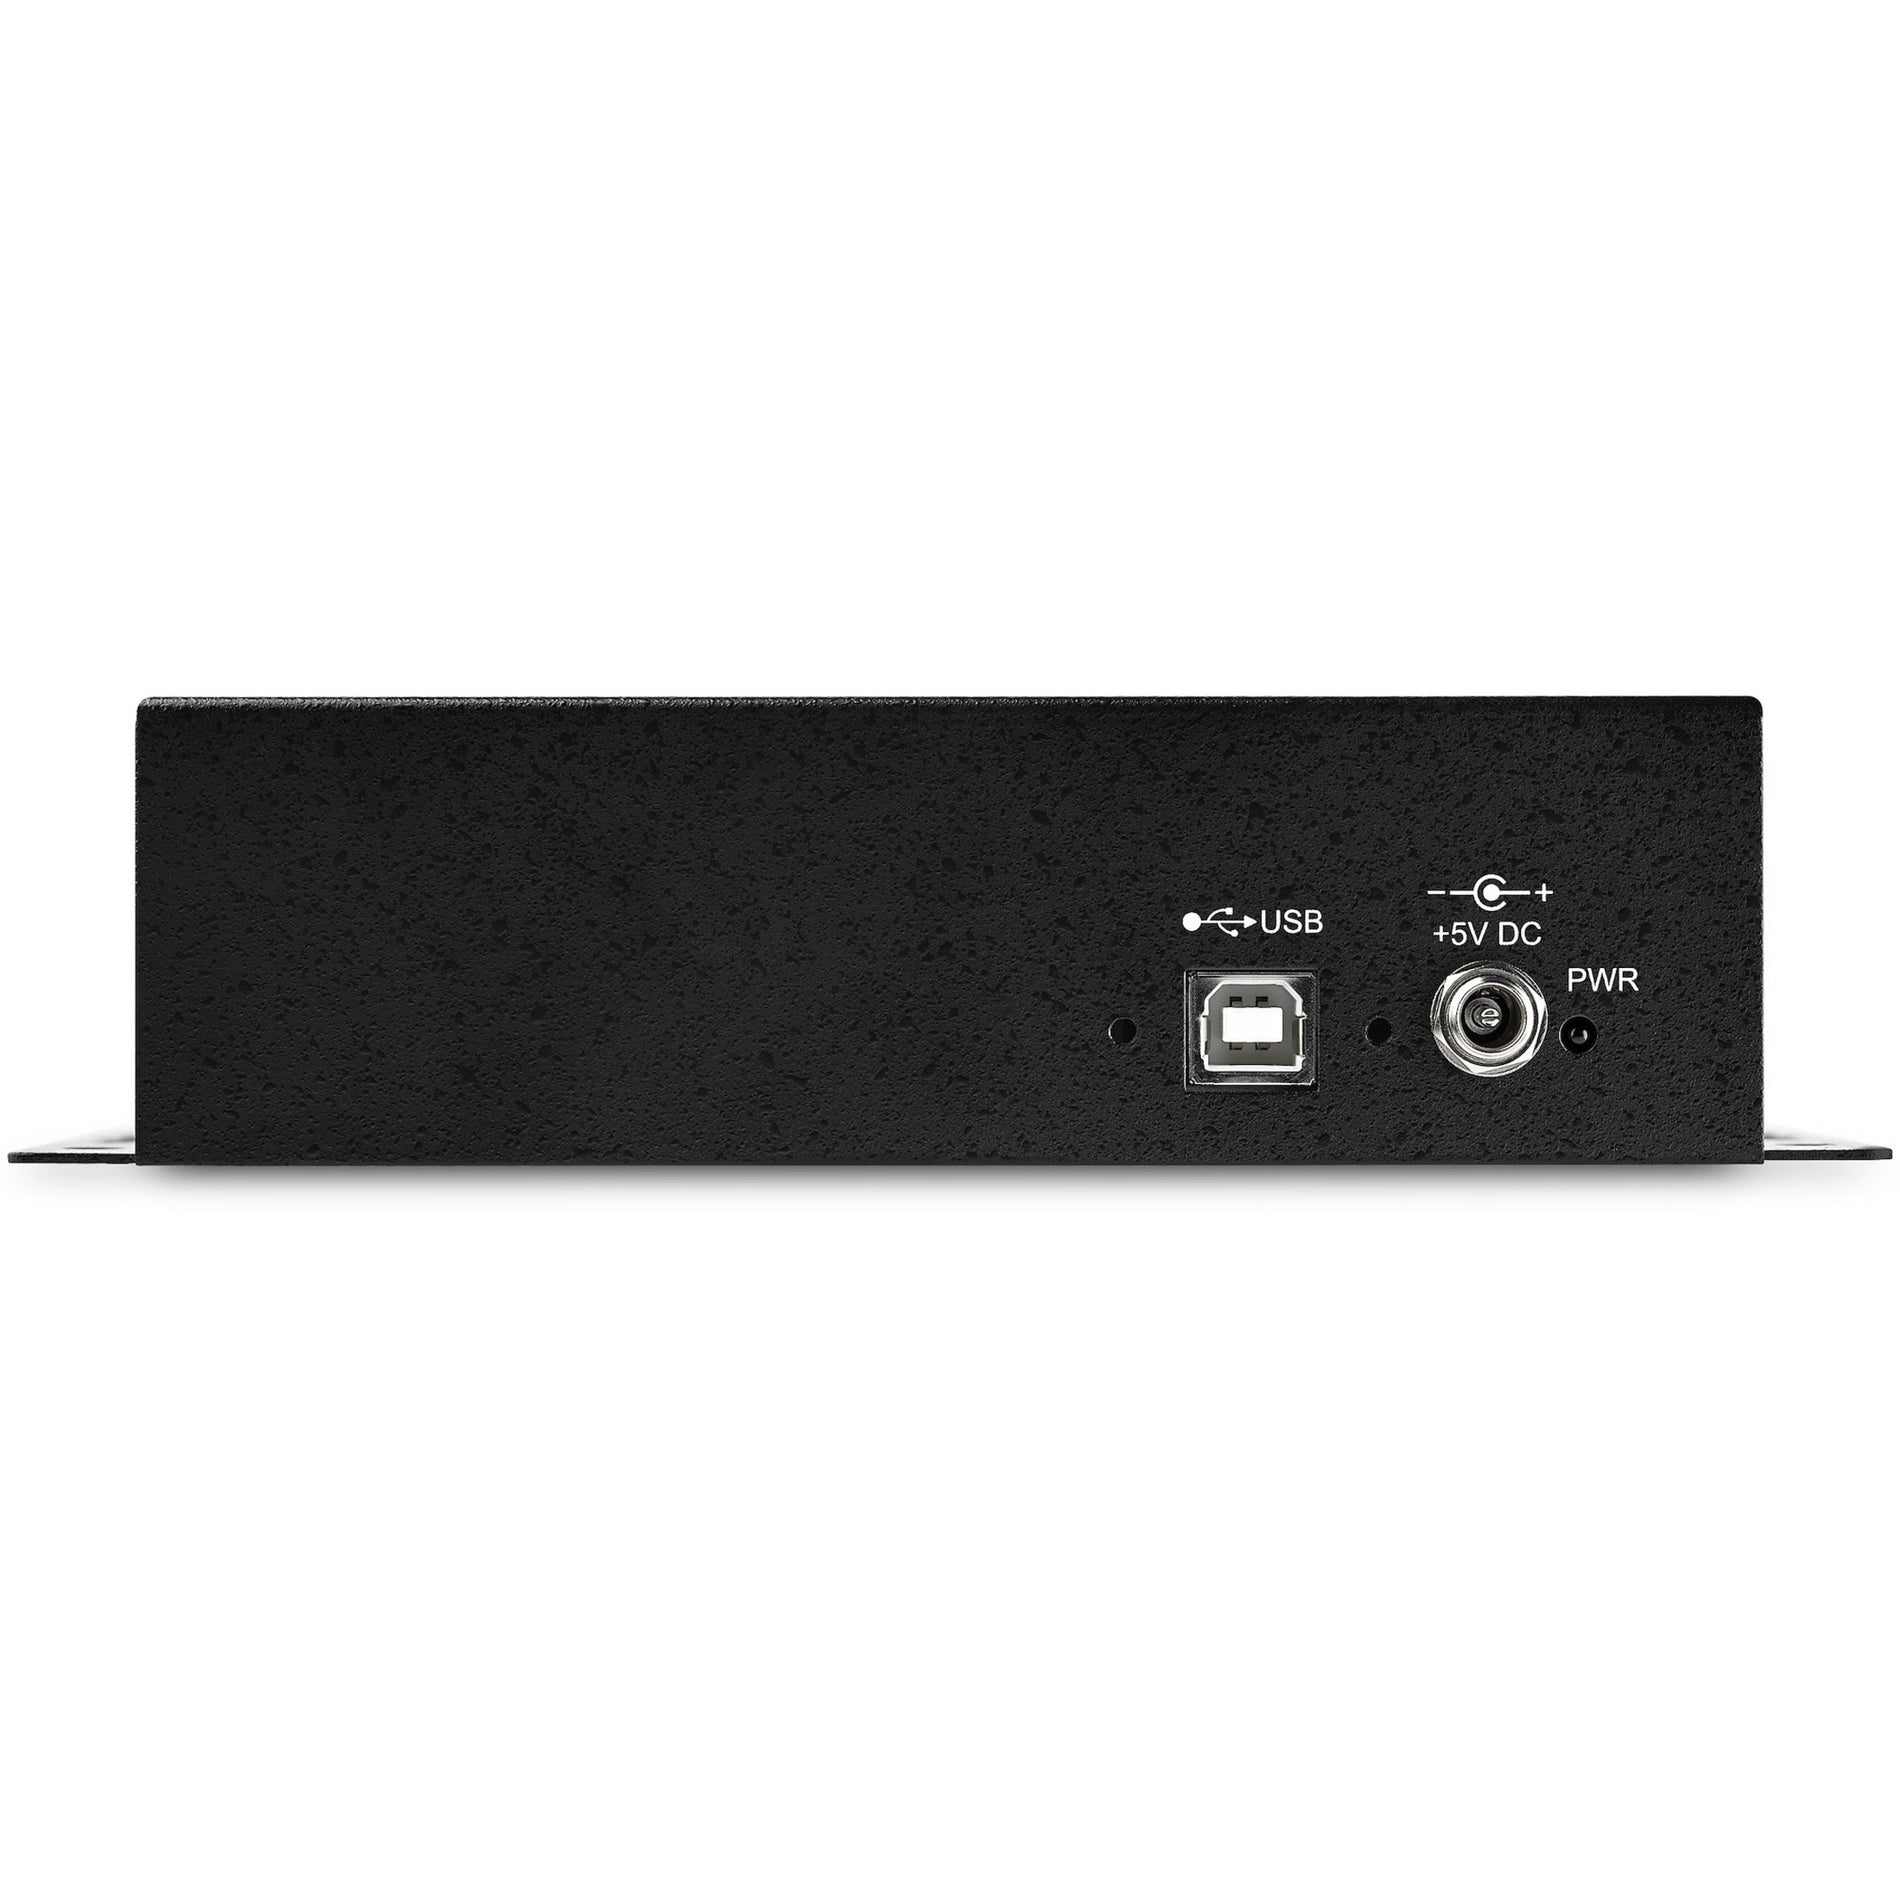 StarTech.com ICUSB2328I USB to RS-232 Serial Adapter Hub, 8 Port, 2 Year Warranty